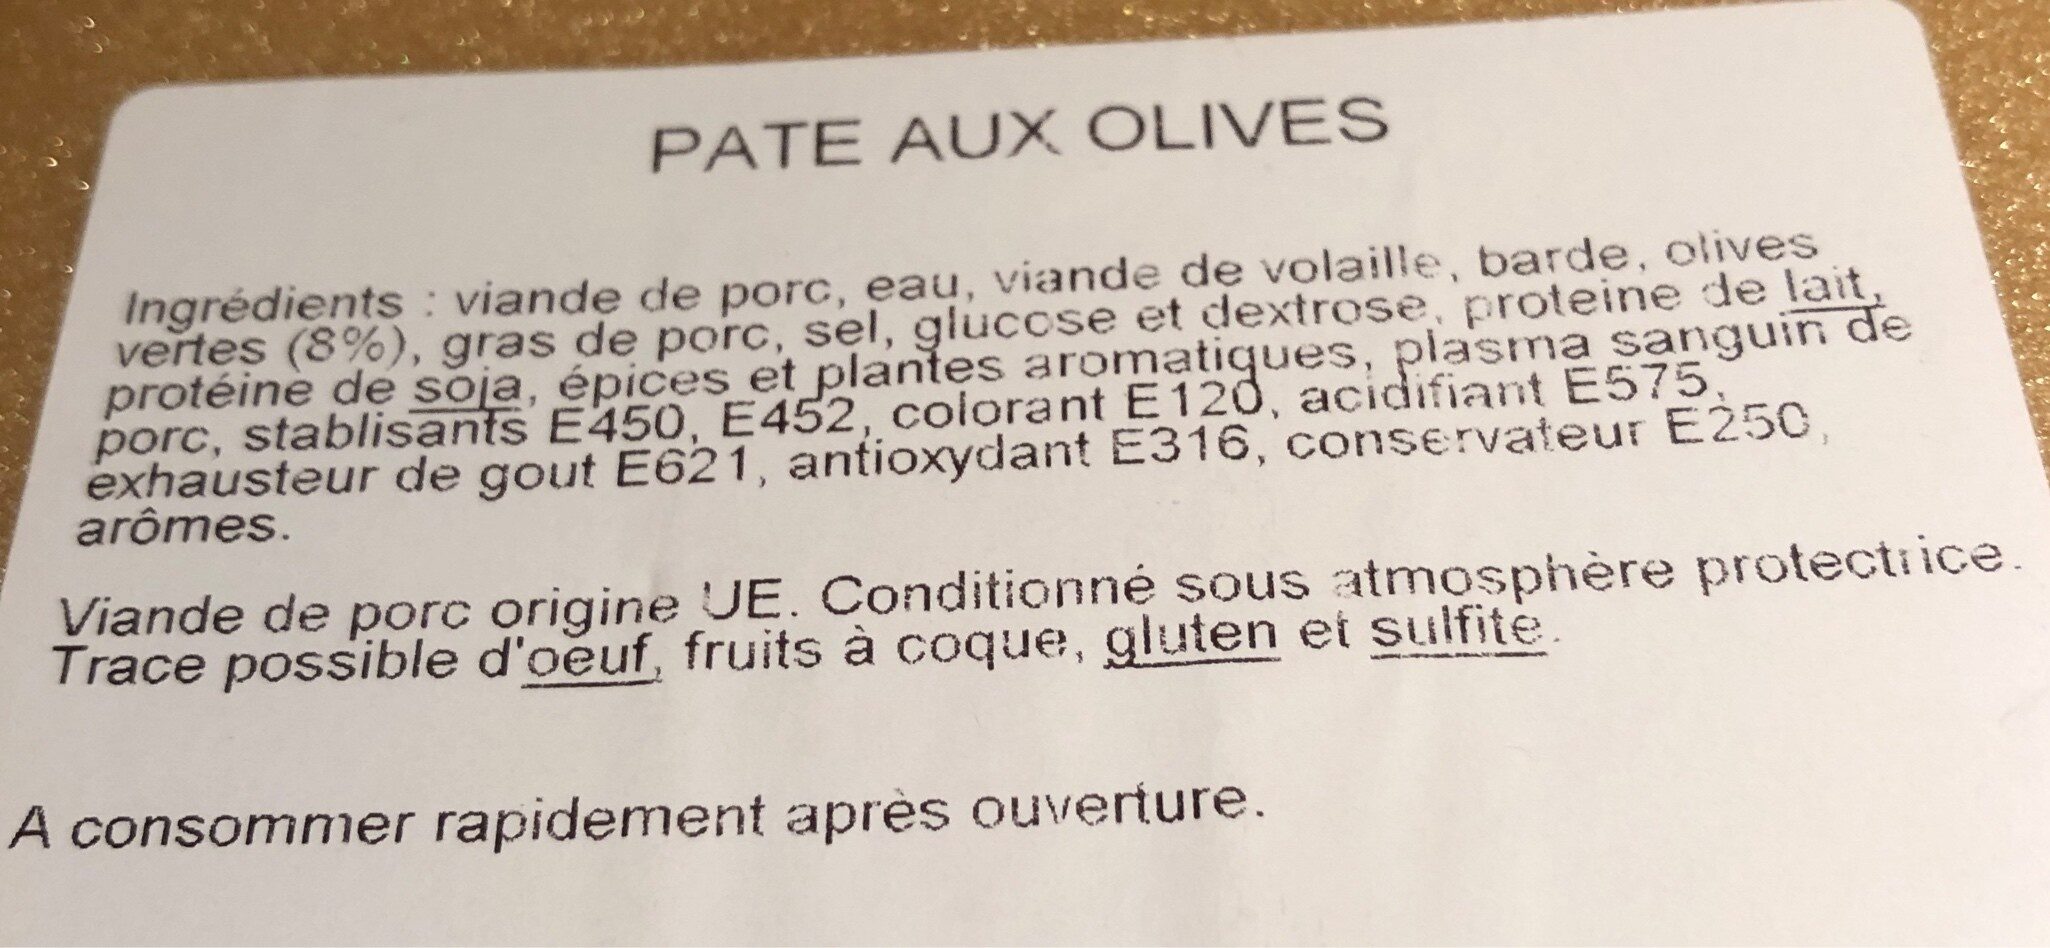 Pate aux olives - Ingredients - fr